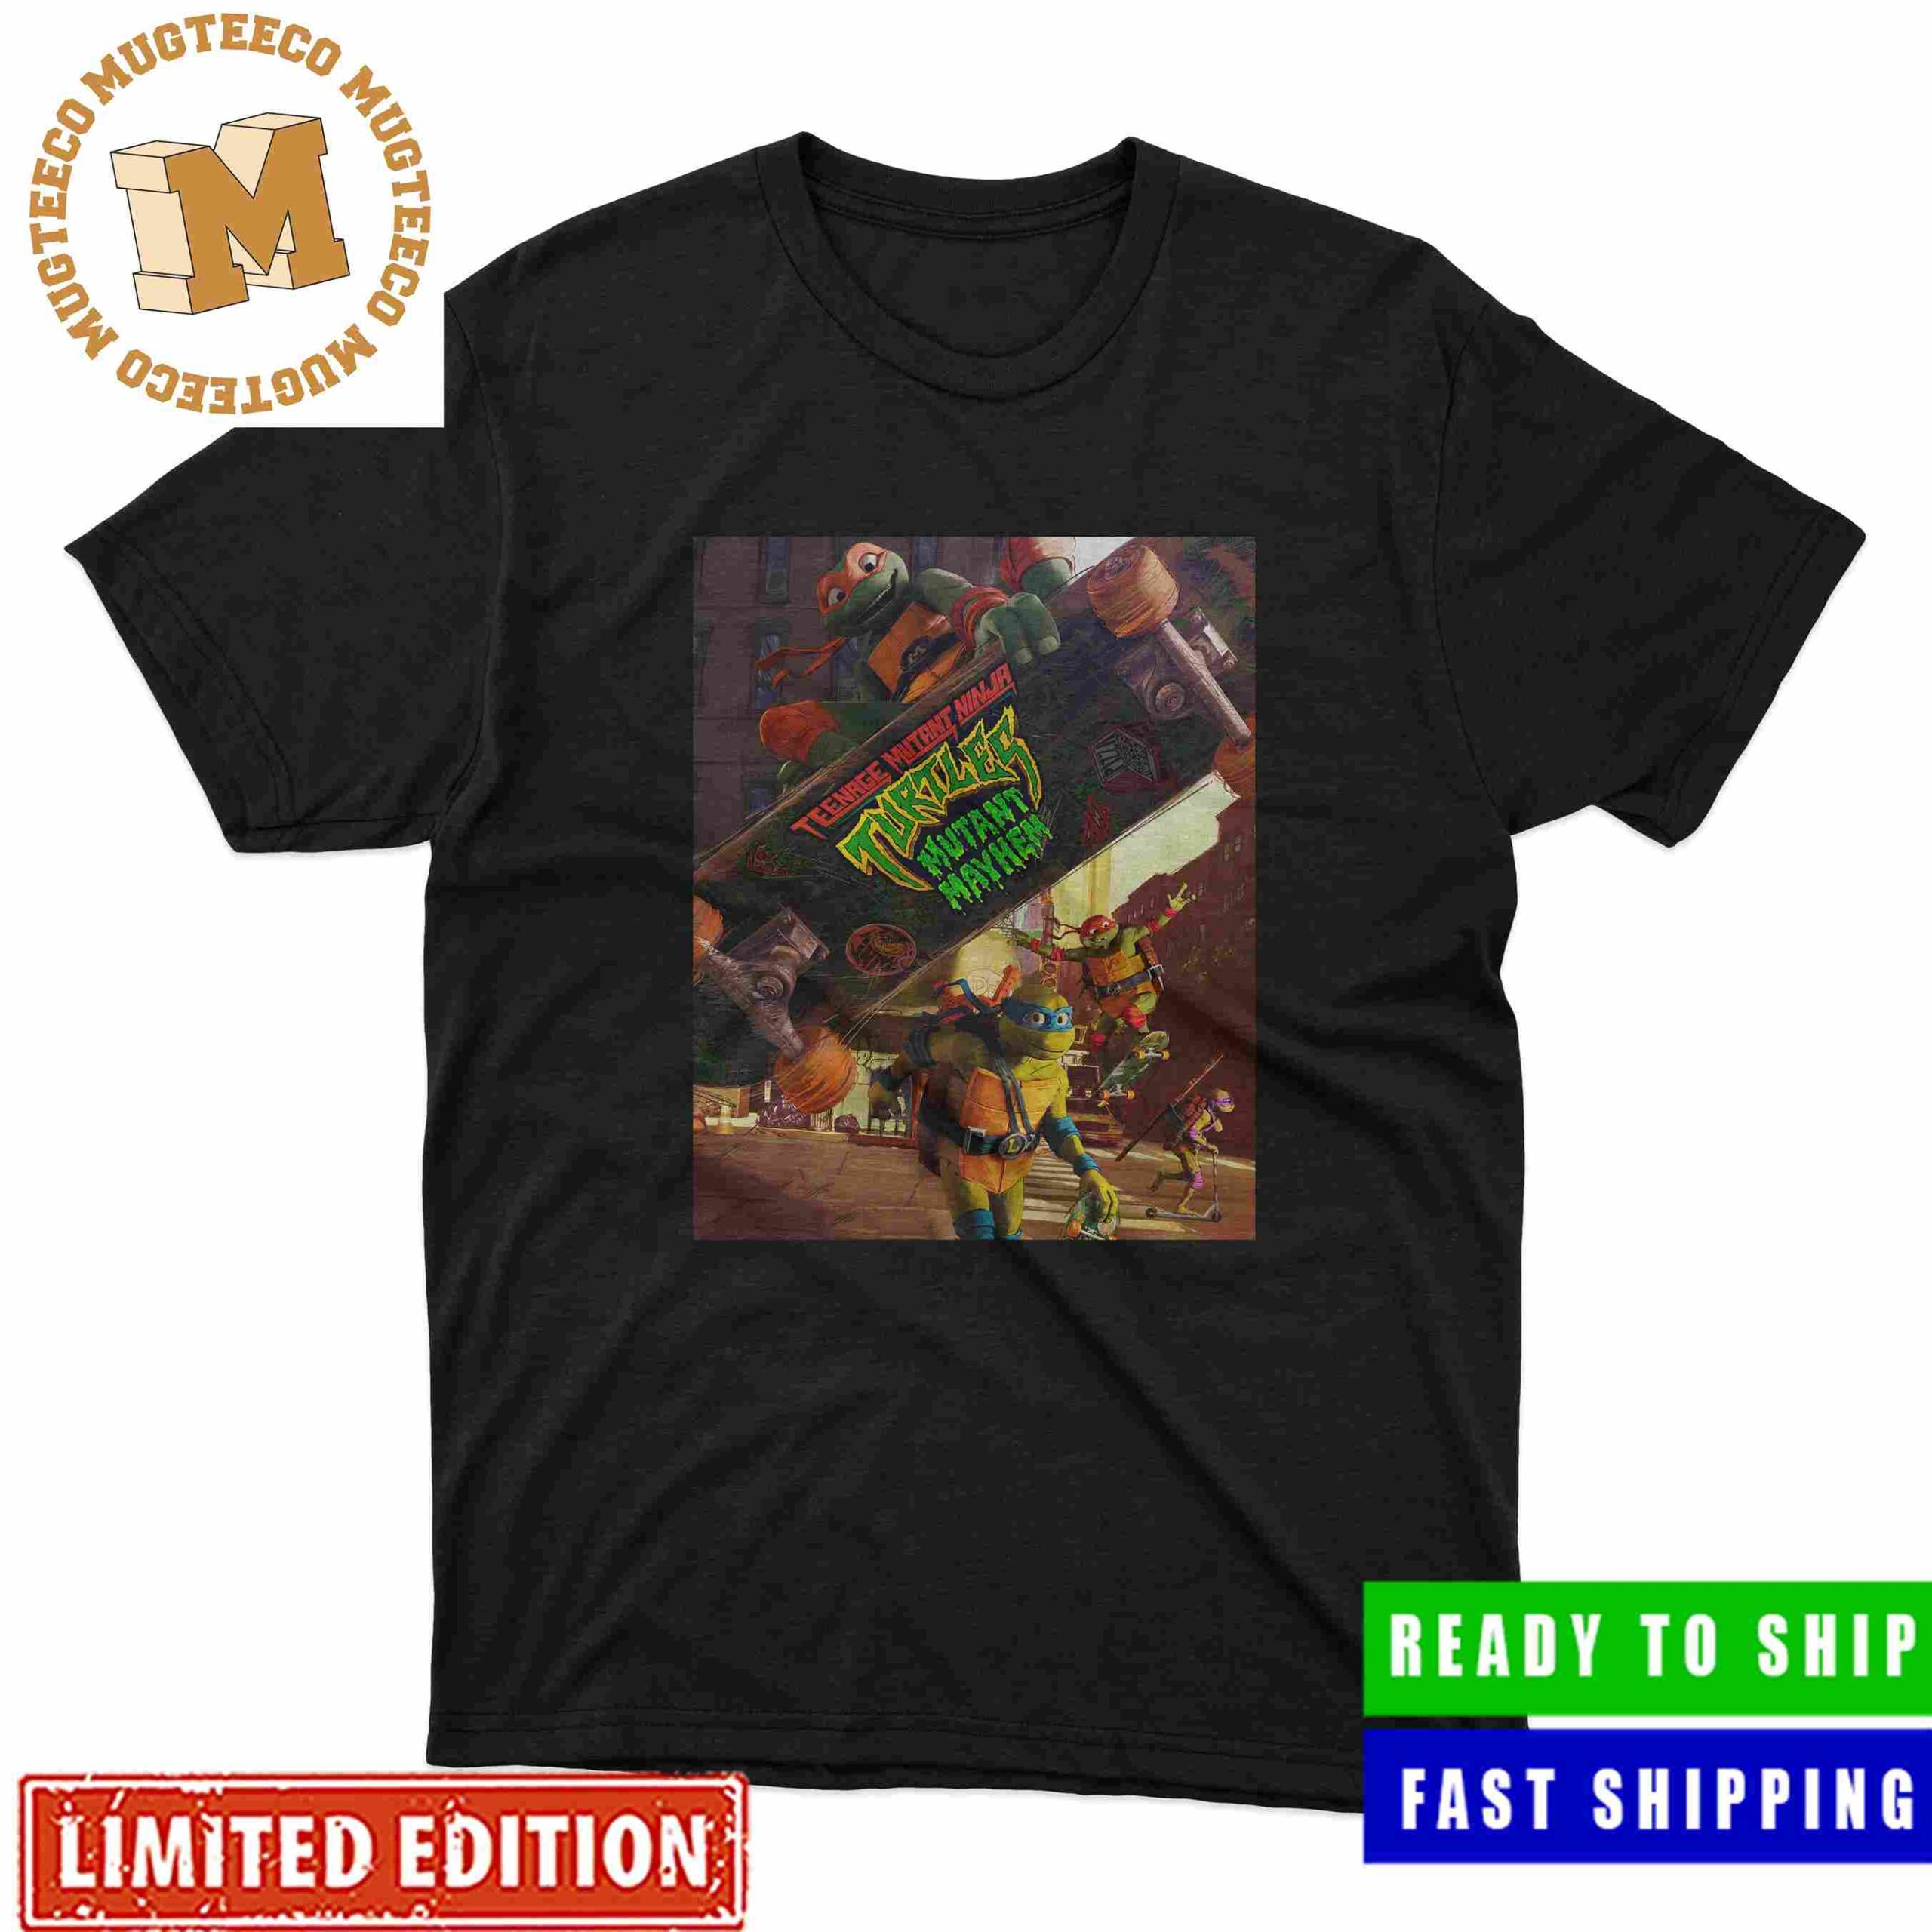 http://mugteeco.com/wp-content/uploads/2023/05/Teenage-Mutant-Ninja-Turtles-Mutant-Mayhem-New-Poster-Unisex-T-Shirt-scaled.jpg